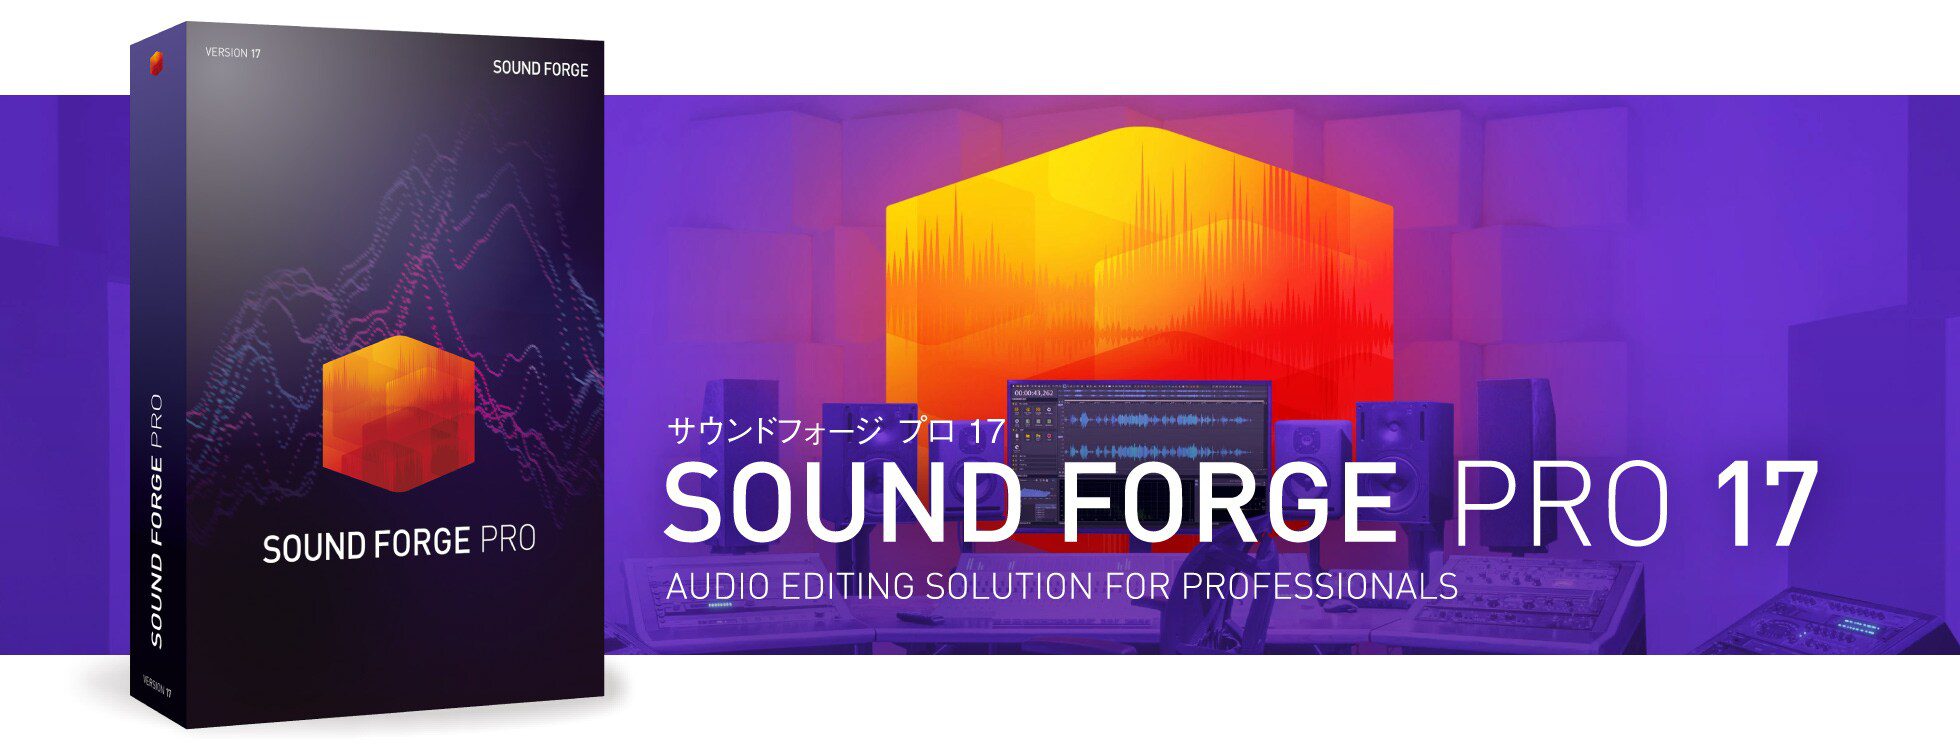 MAGIX SOUND FORGE Pro 17 Full Version Crack